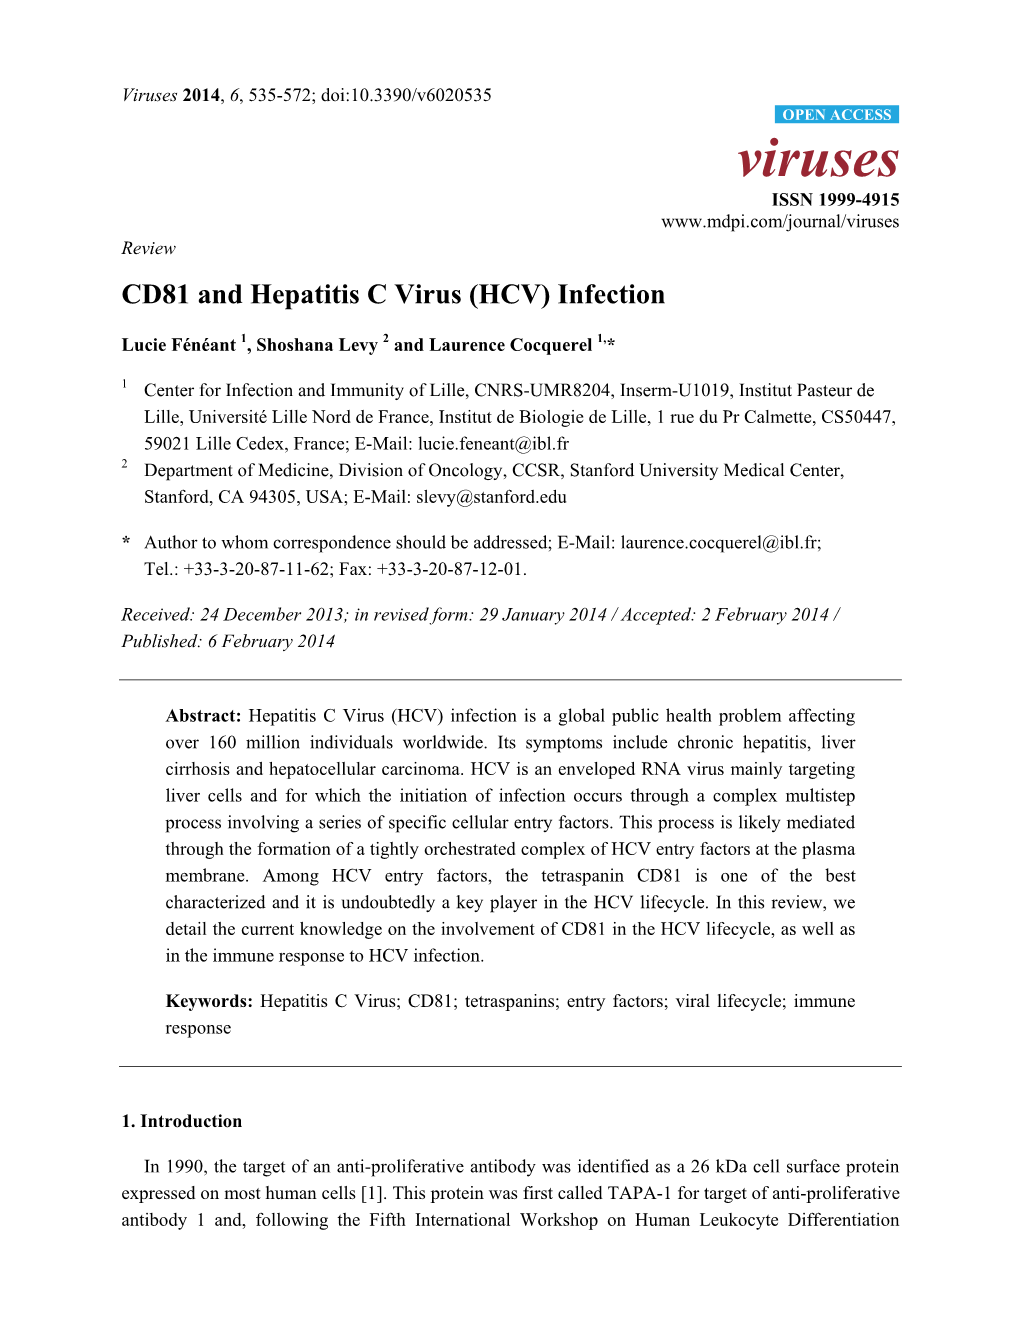 CD81 and Hepatitis C Virus (HCV) Infection